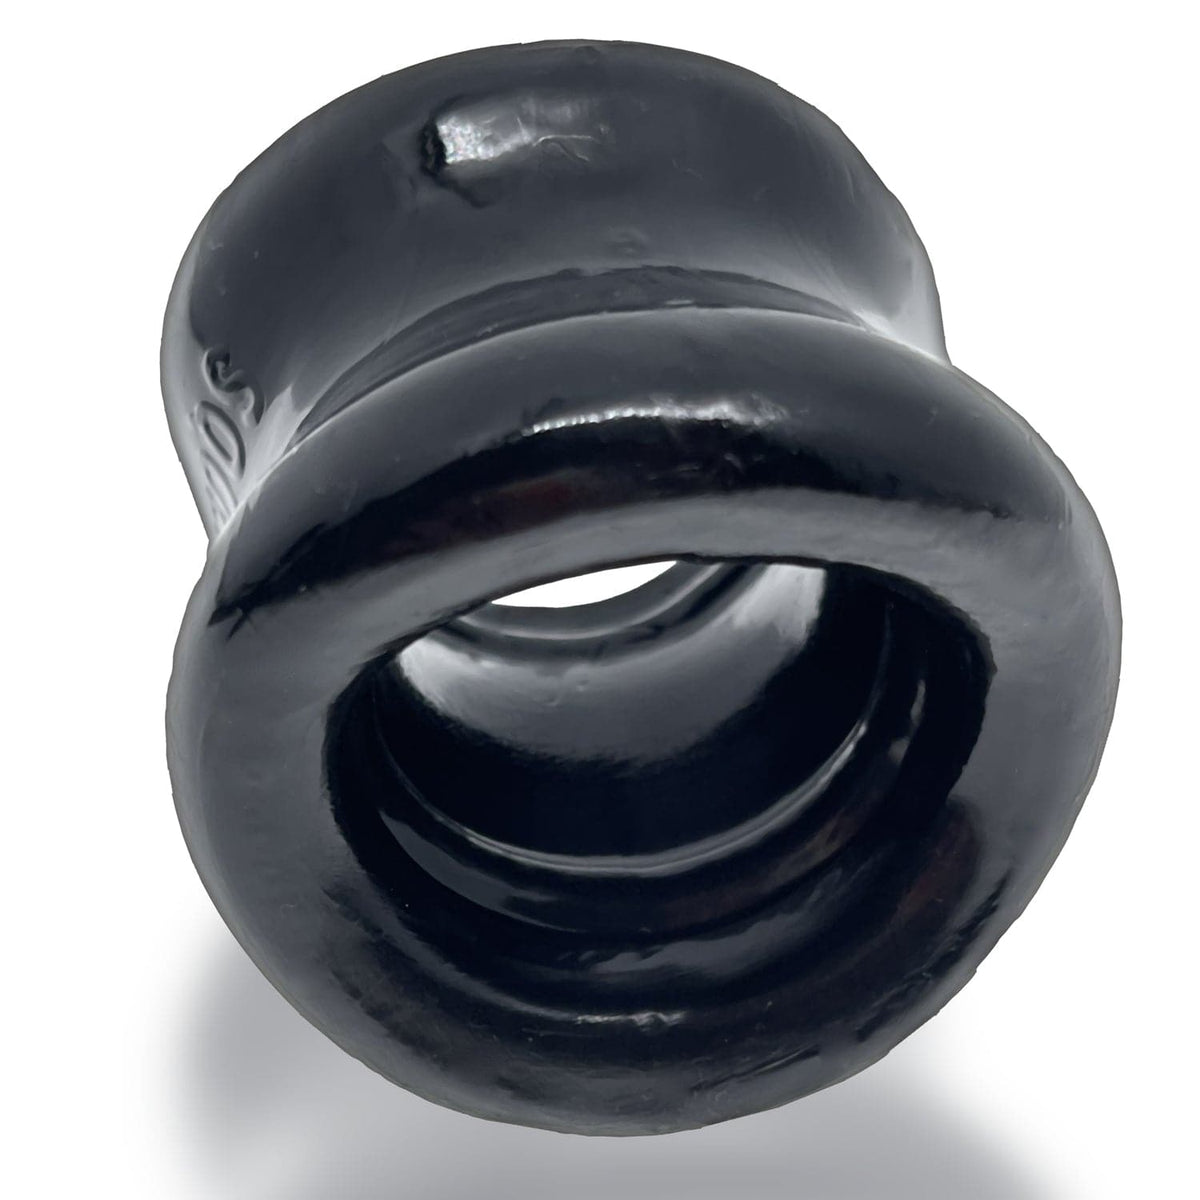 mega squeeze ergofit ballstretcher black